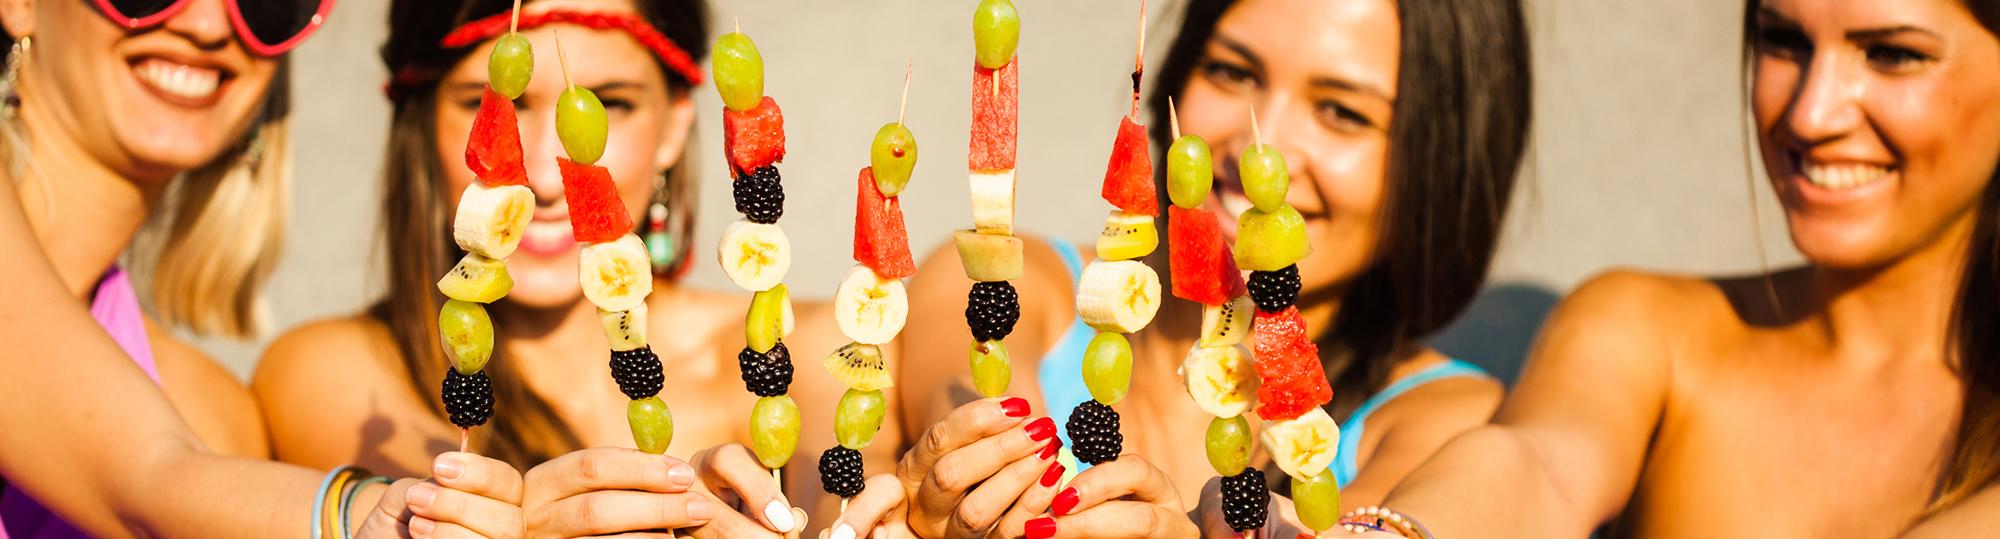 fruitbouquets.com deal hero girls eating fruit kabobs